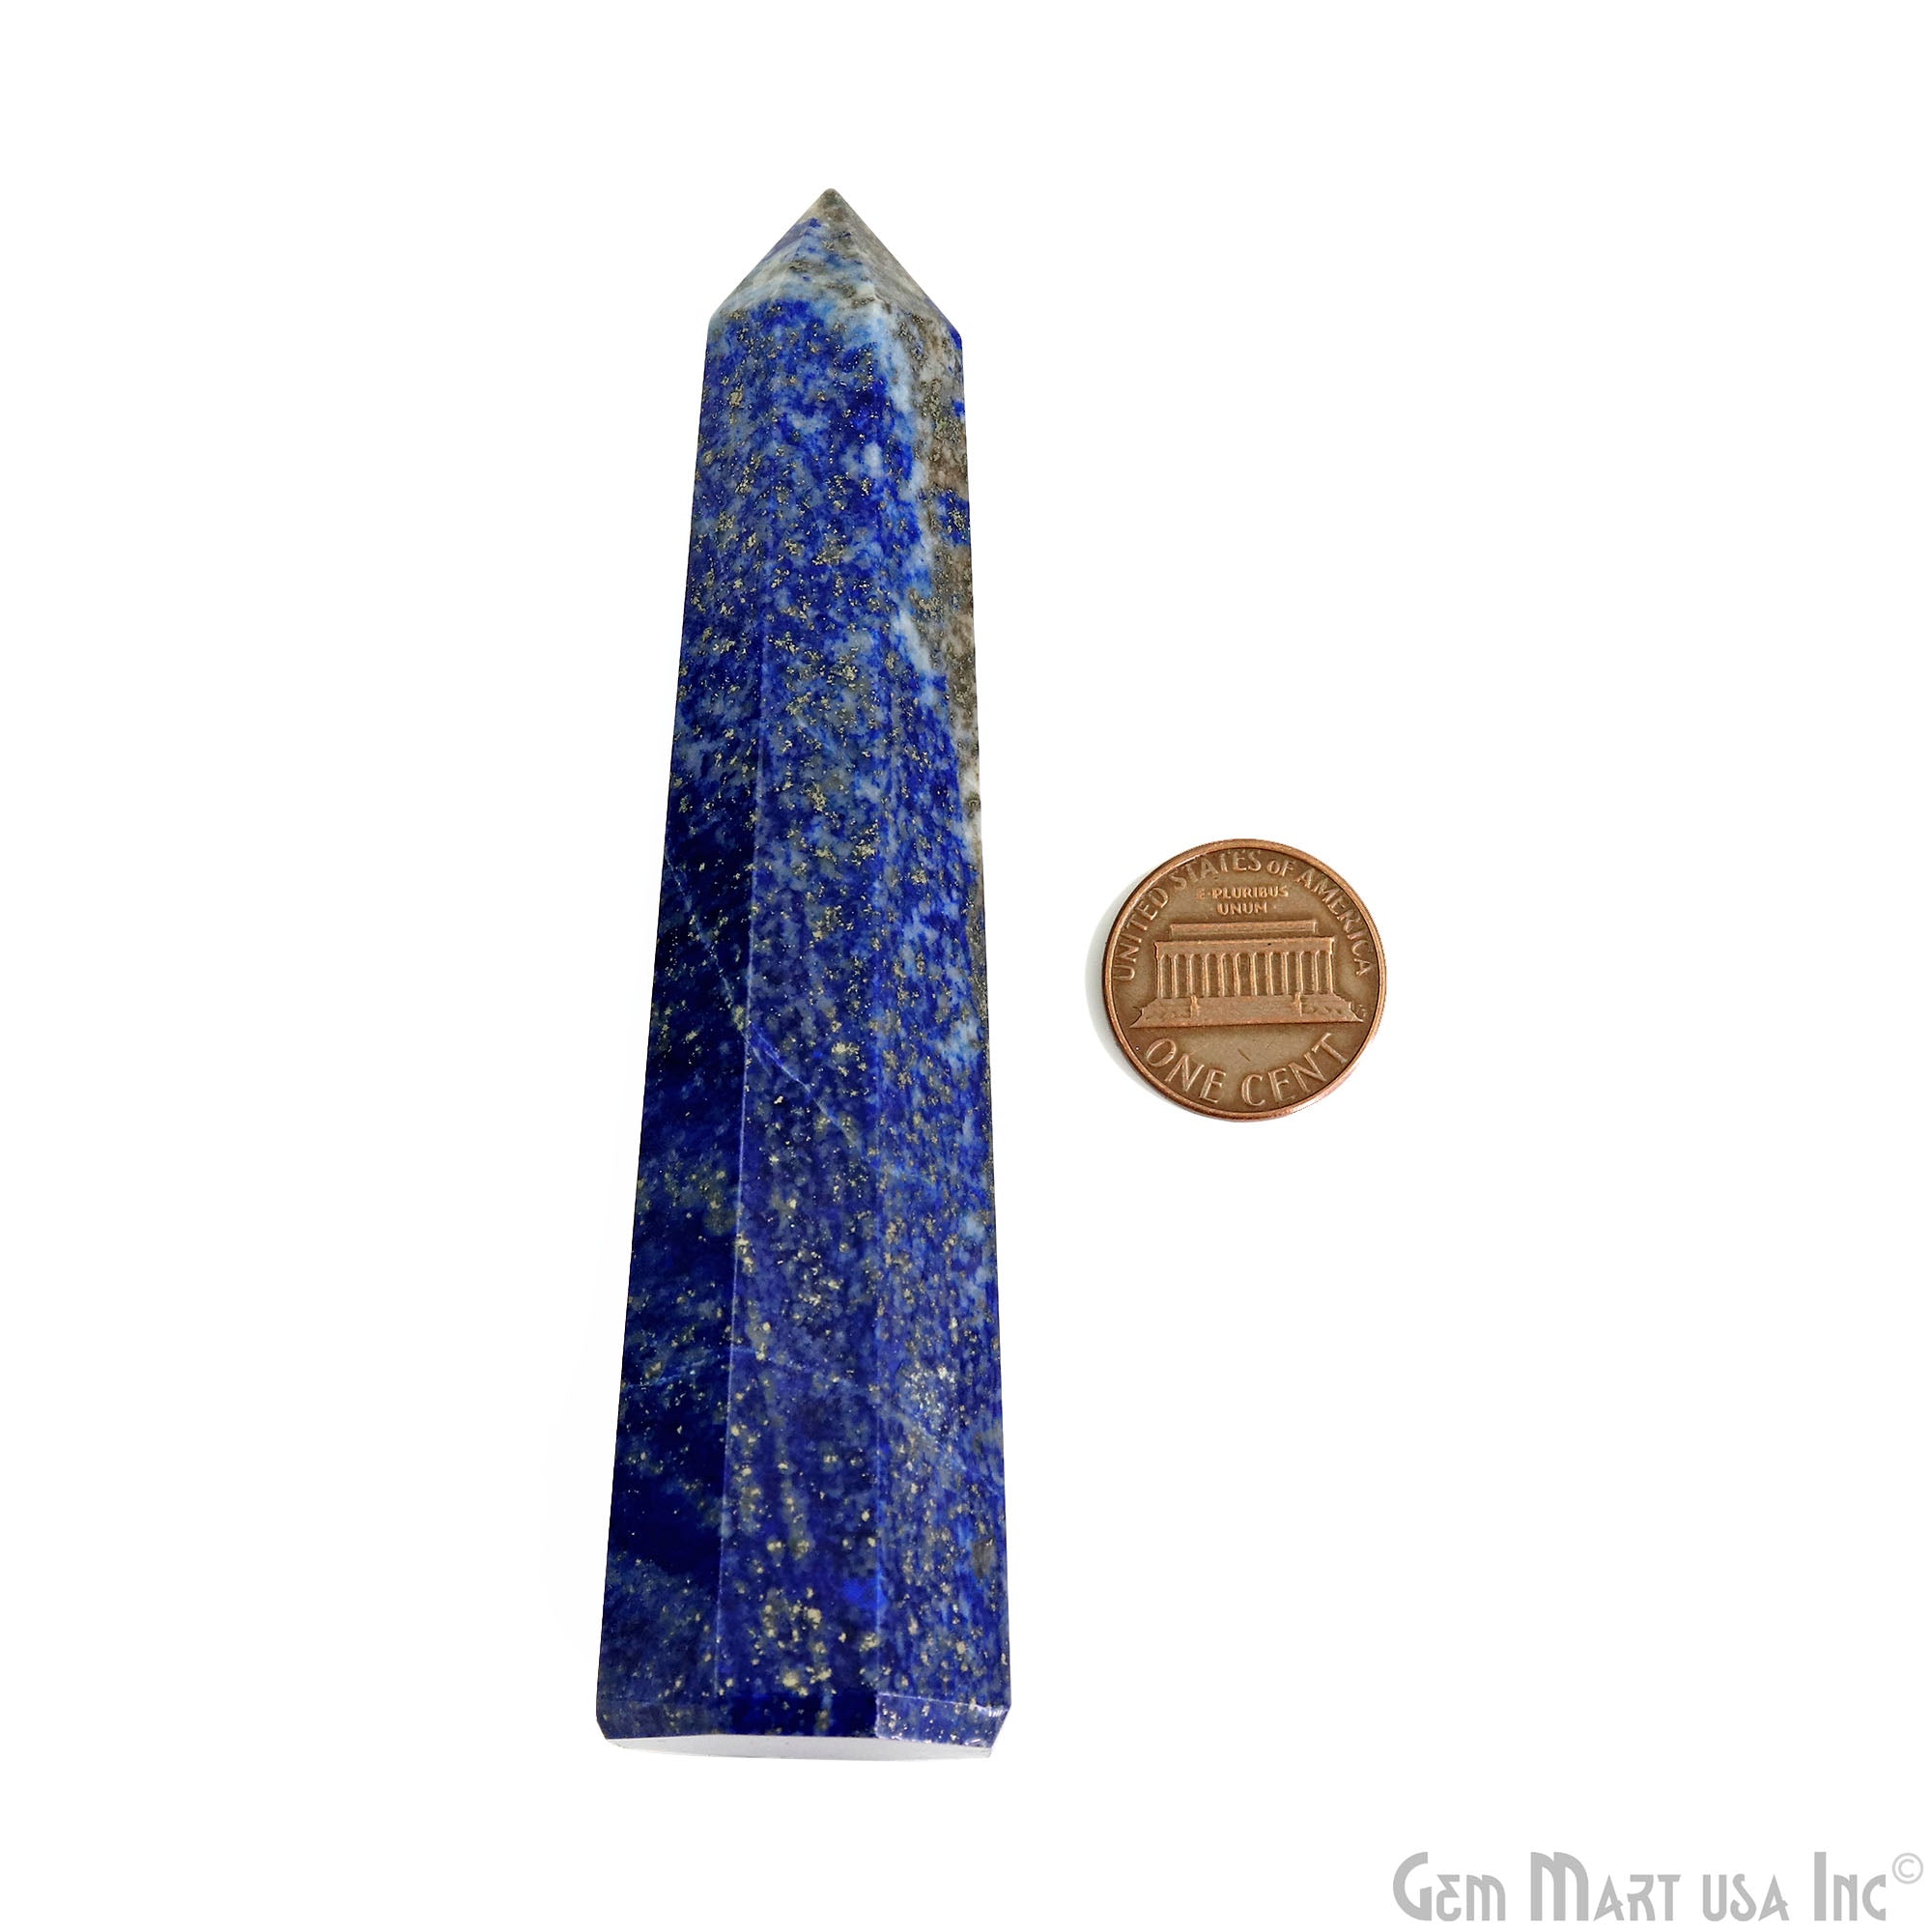 Lapis Gemstone Jumbo Tower Crystal Tower Obelisk Healing Meditation Gemstones 4-5 Inch